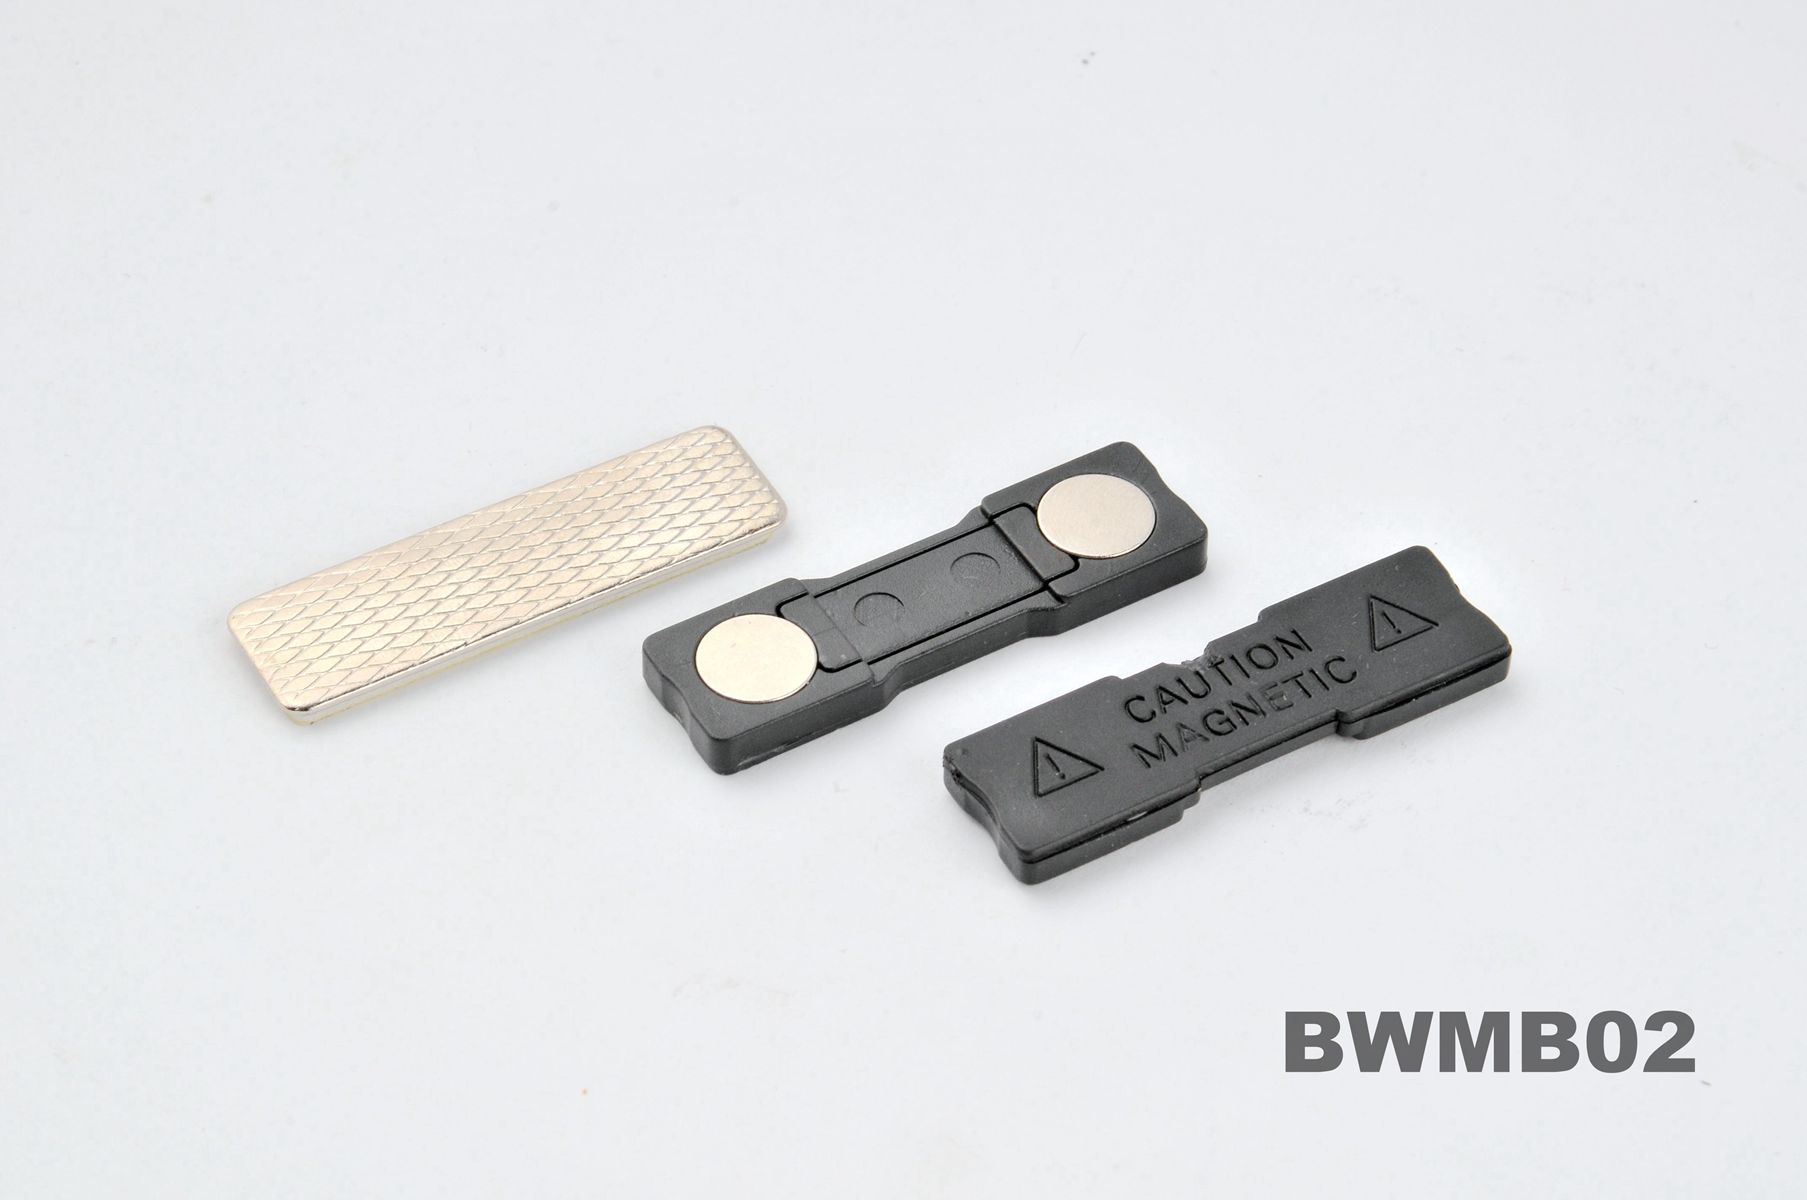 BWMB07 Magnetic Name Badge Holder